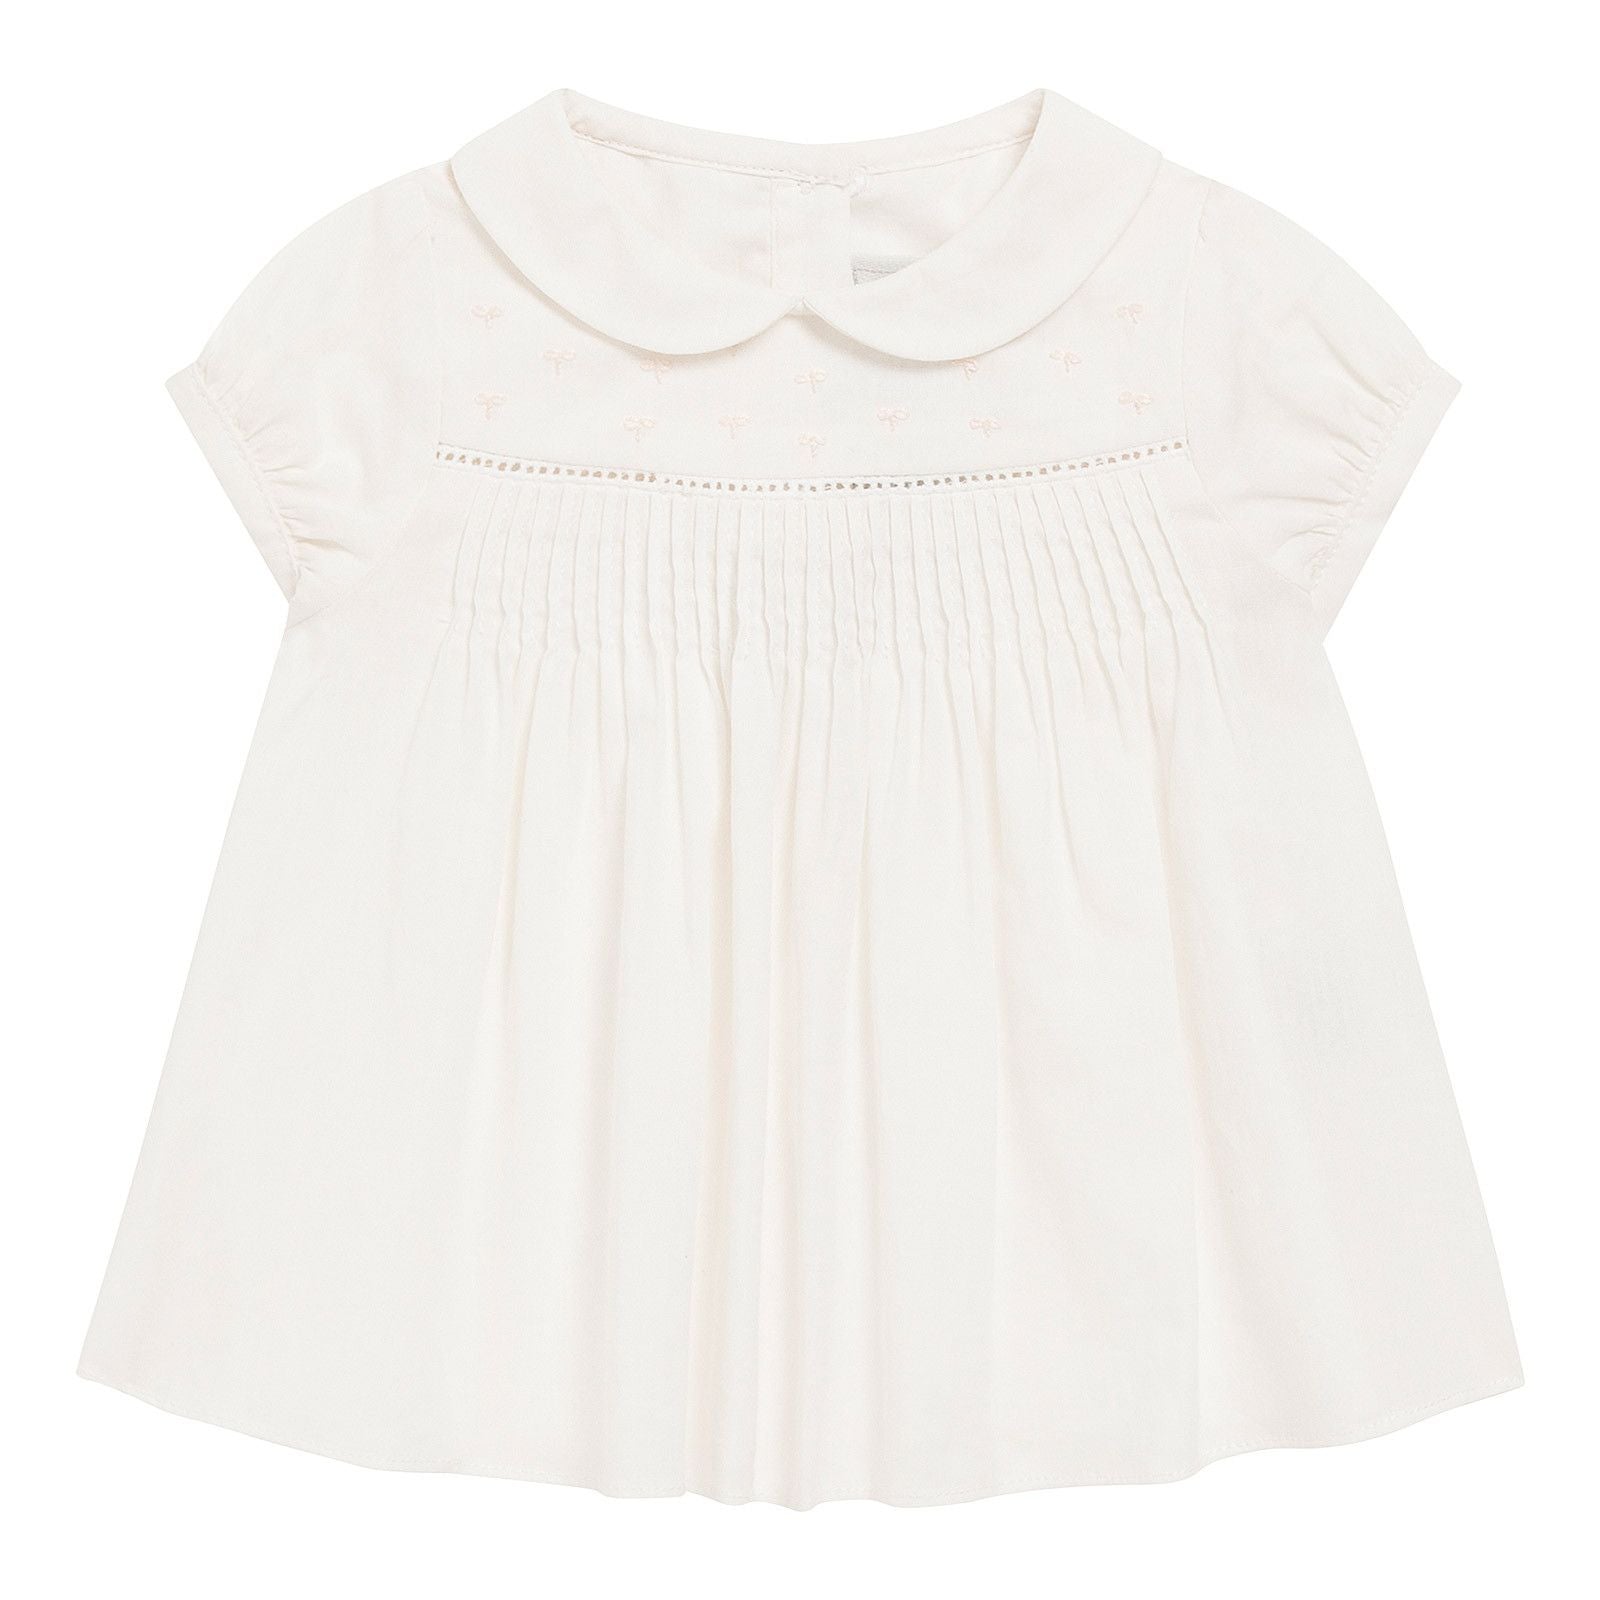 Baby Girls White Cotton Peter Pan Collar Top - CÉMAROSE | Children's Fashion Store